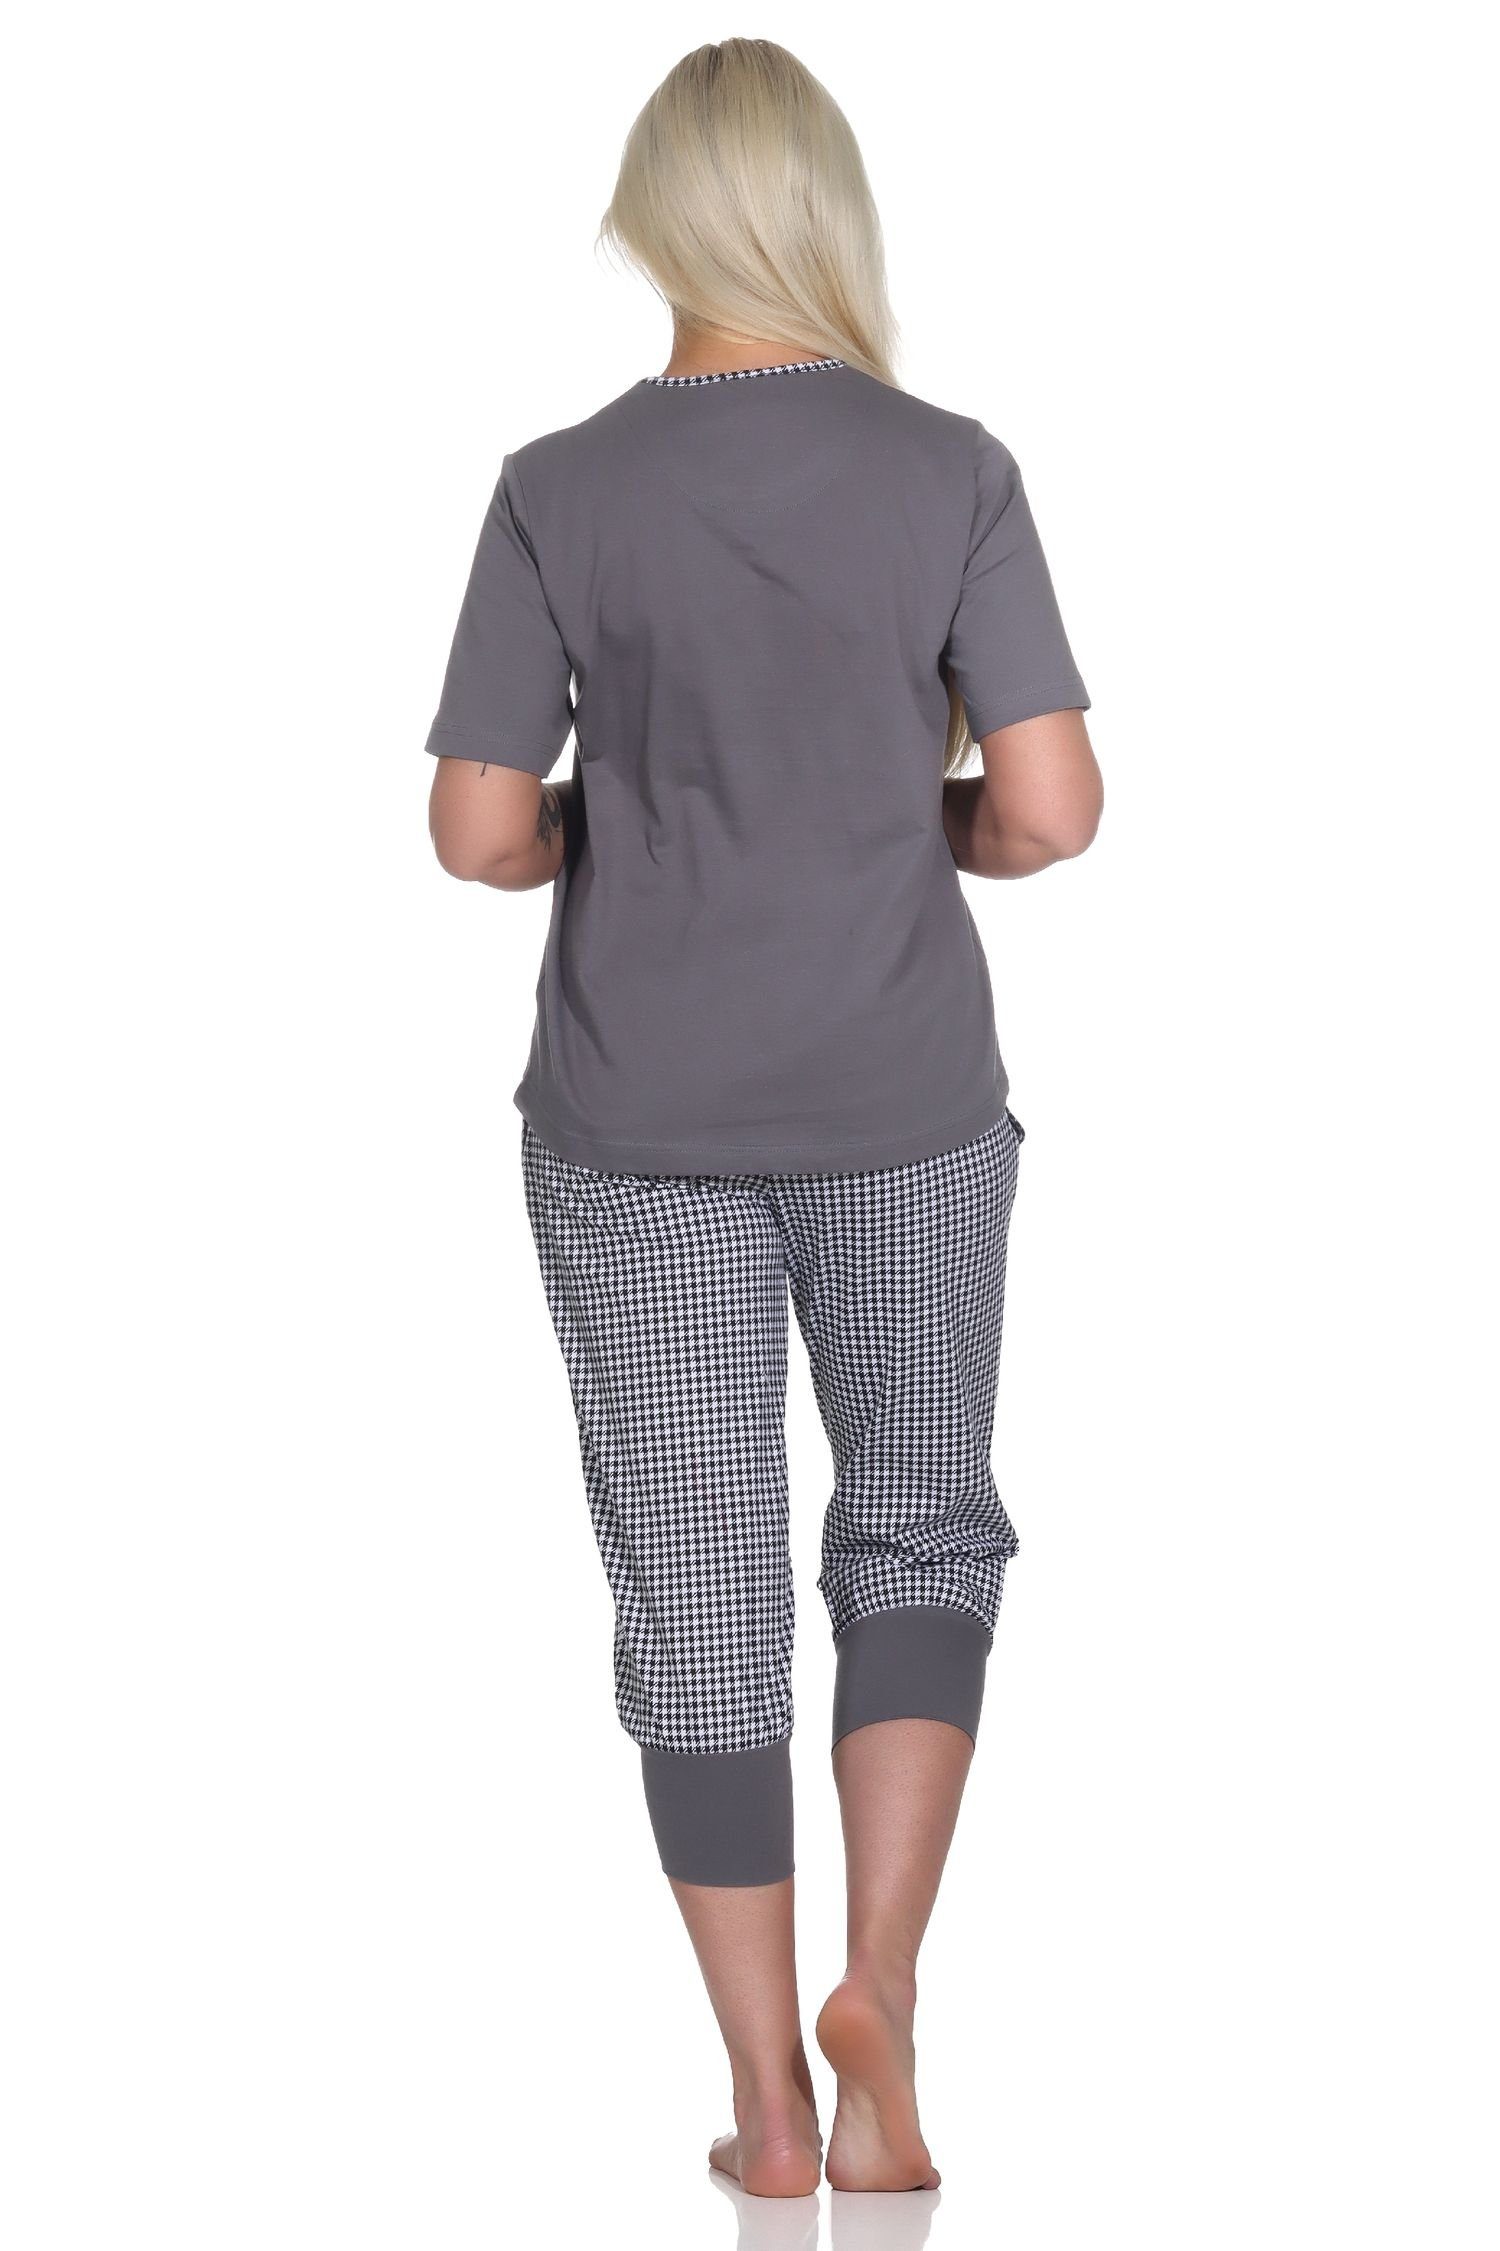 Normann Pyjama Damen Capri Schlafanzug grau auch Pepita-Look, Übergrößen in kurzarm im